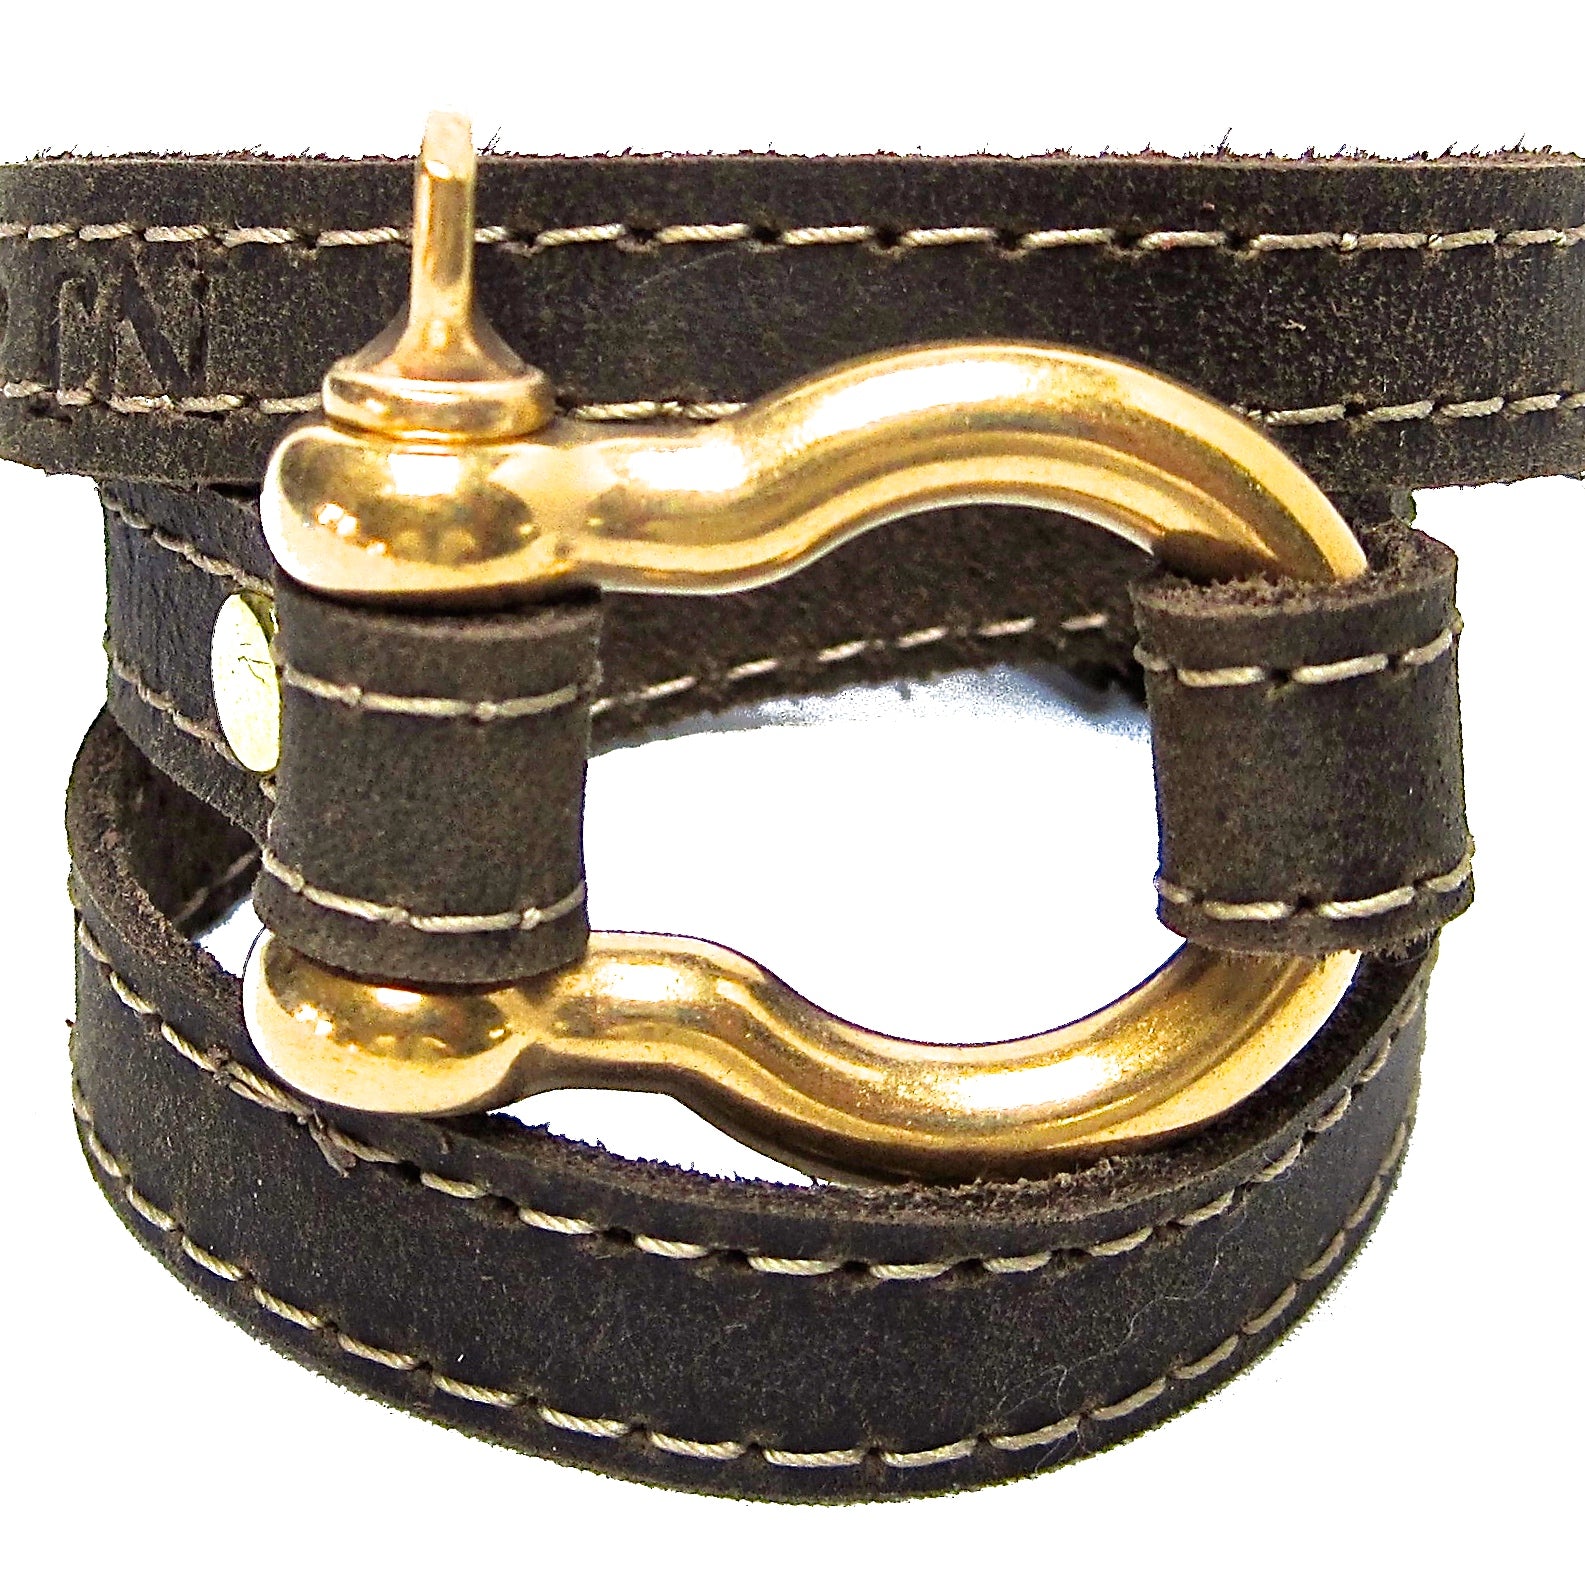 Nyet jewelry Signature Gold Shackle Wraparound Bracelet Distressed Utility Leather BY NYET JEWELRY